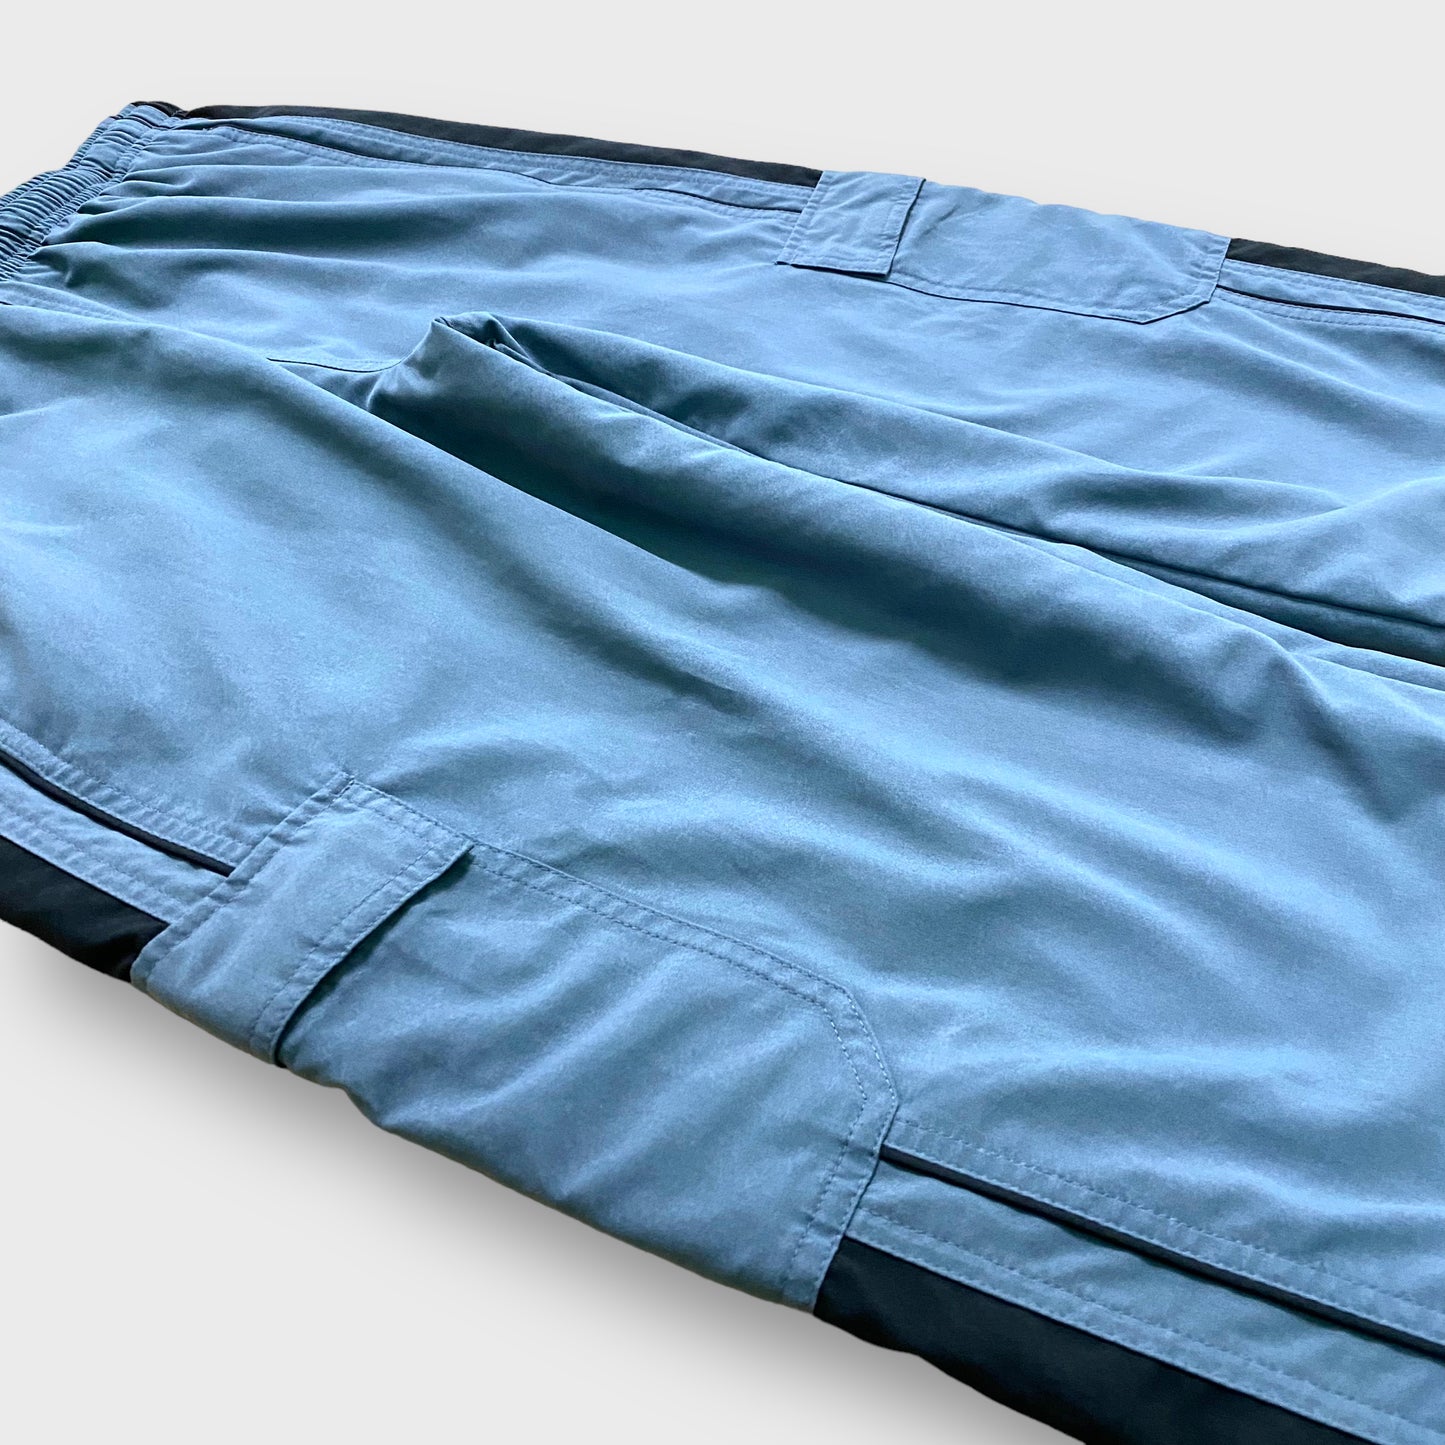 00's "NIKE" Nylon cargo pants